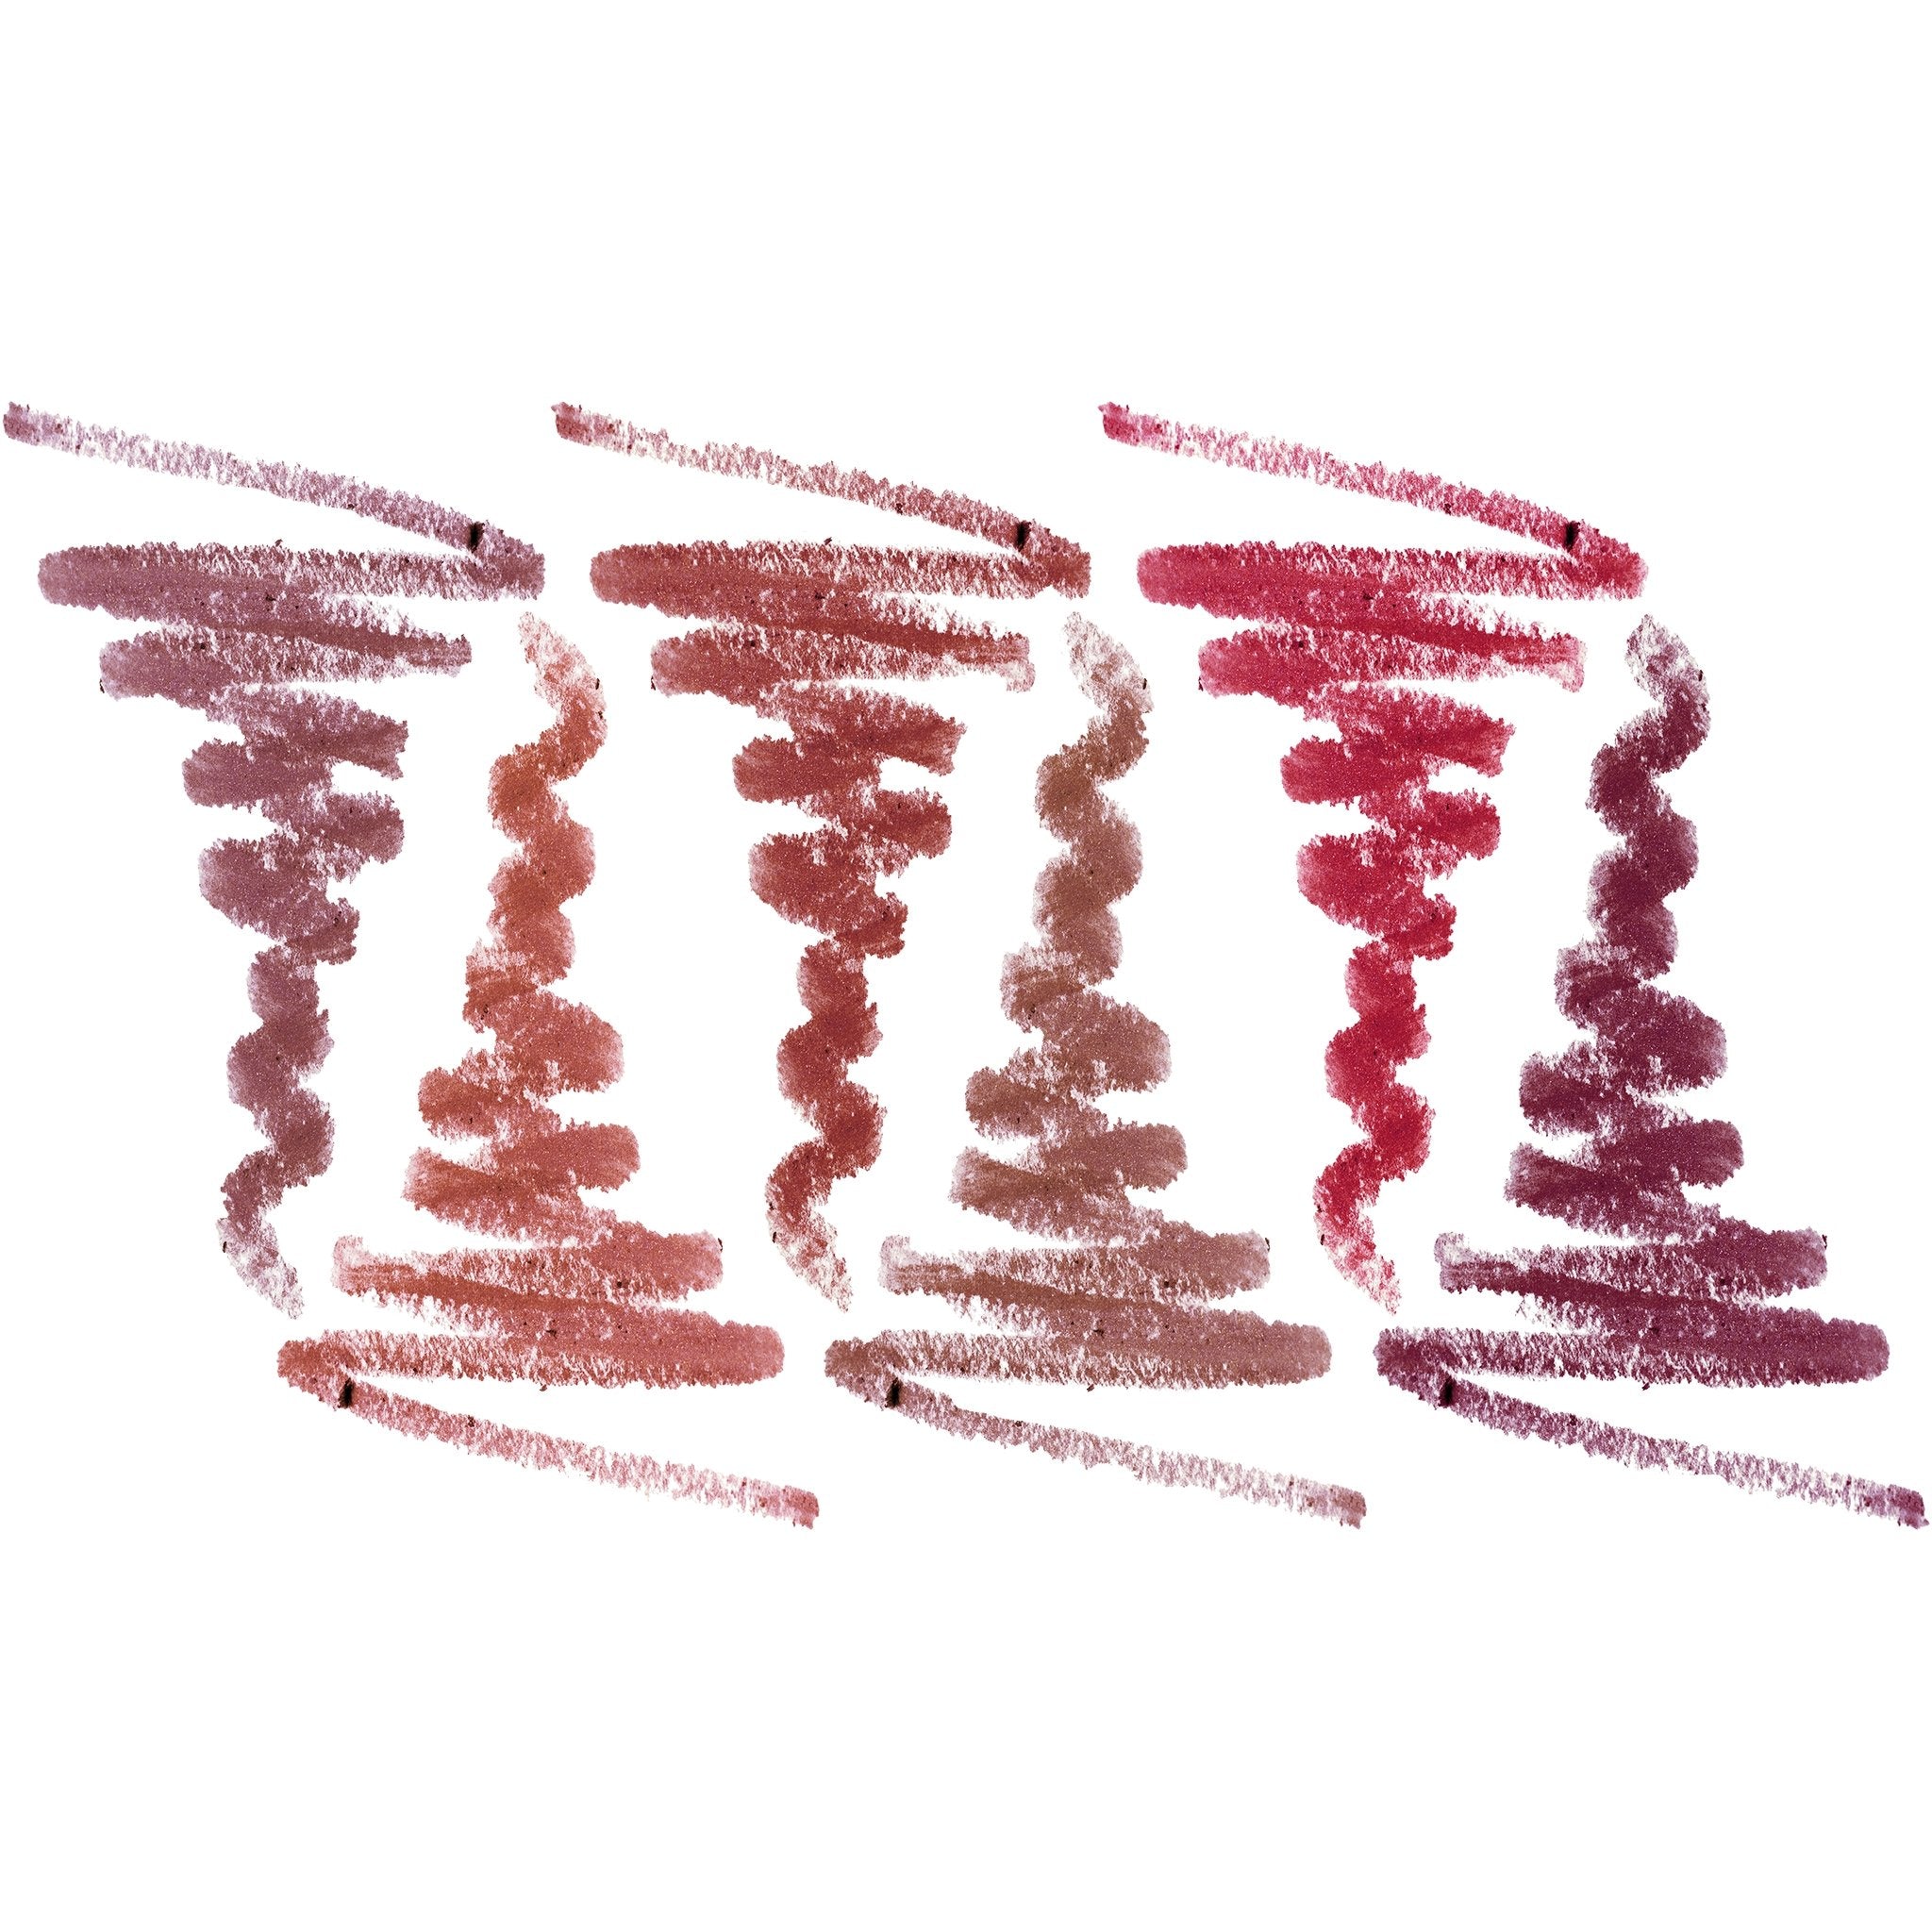 NEW Lipstick Crayon - mypure.co.uk